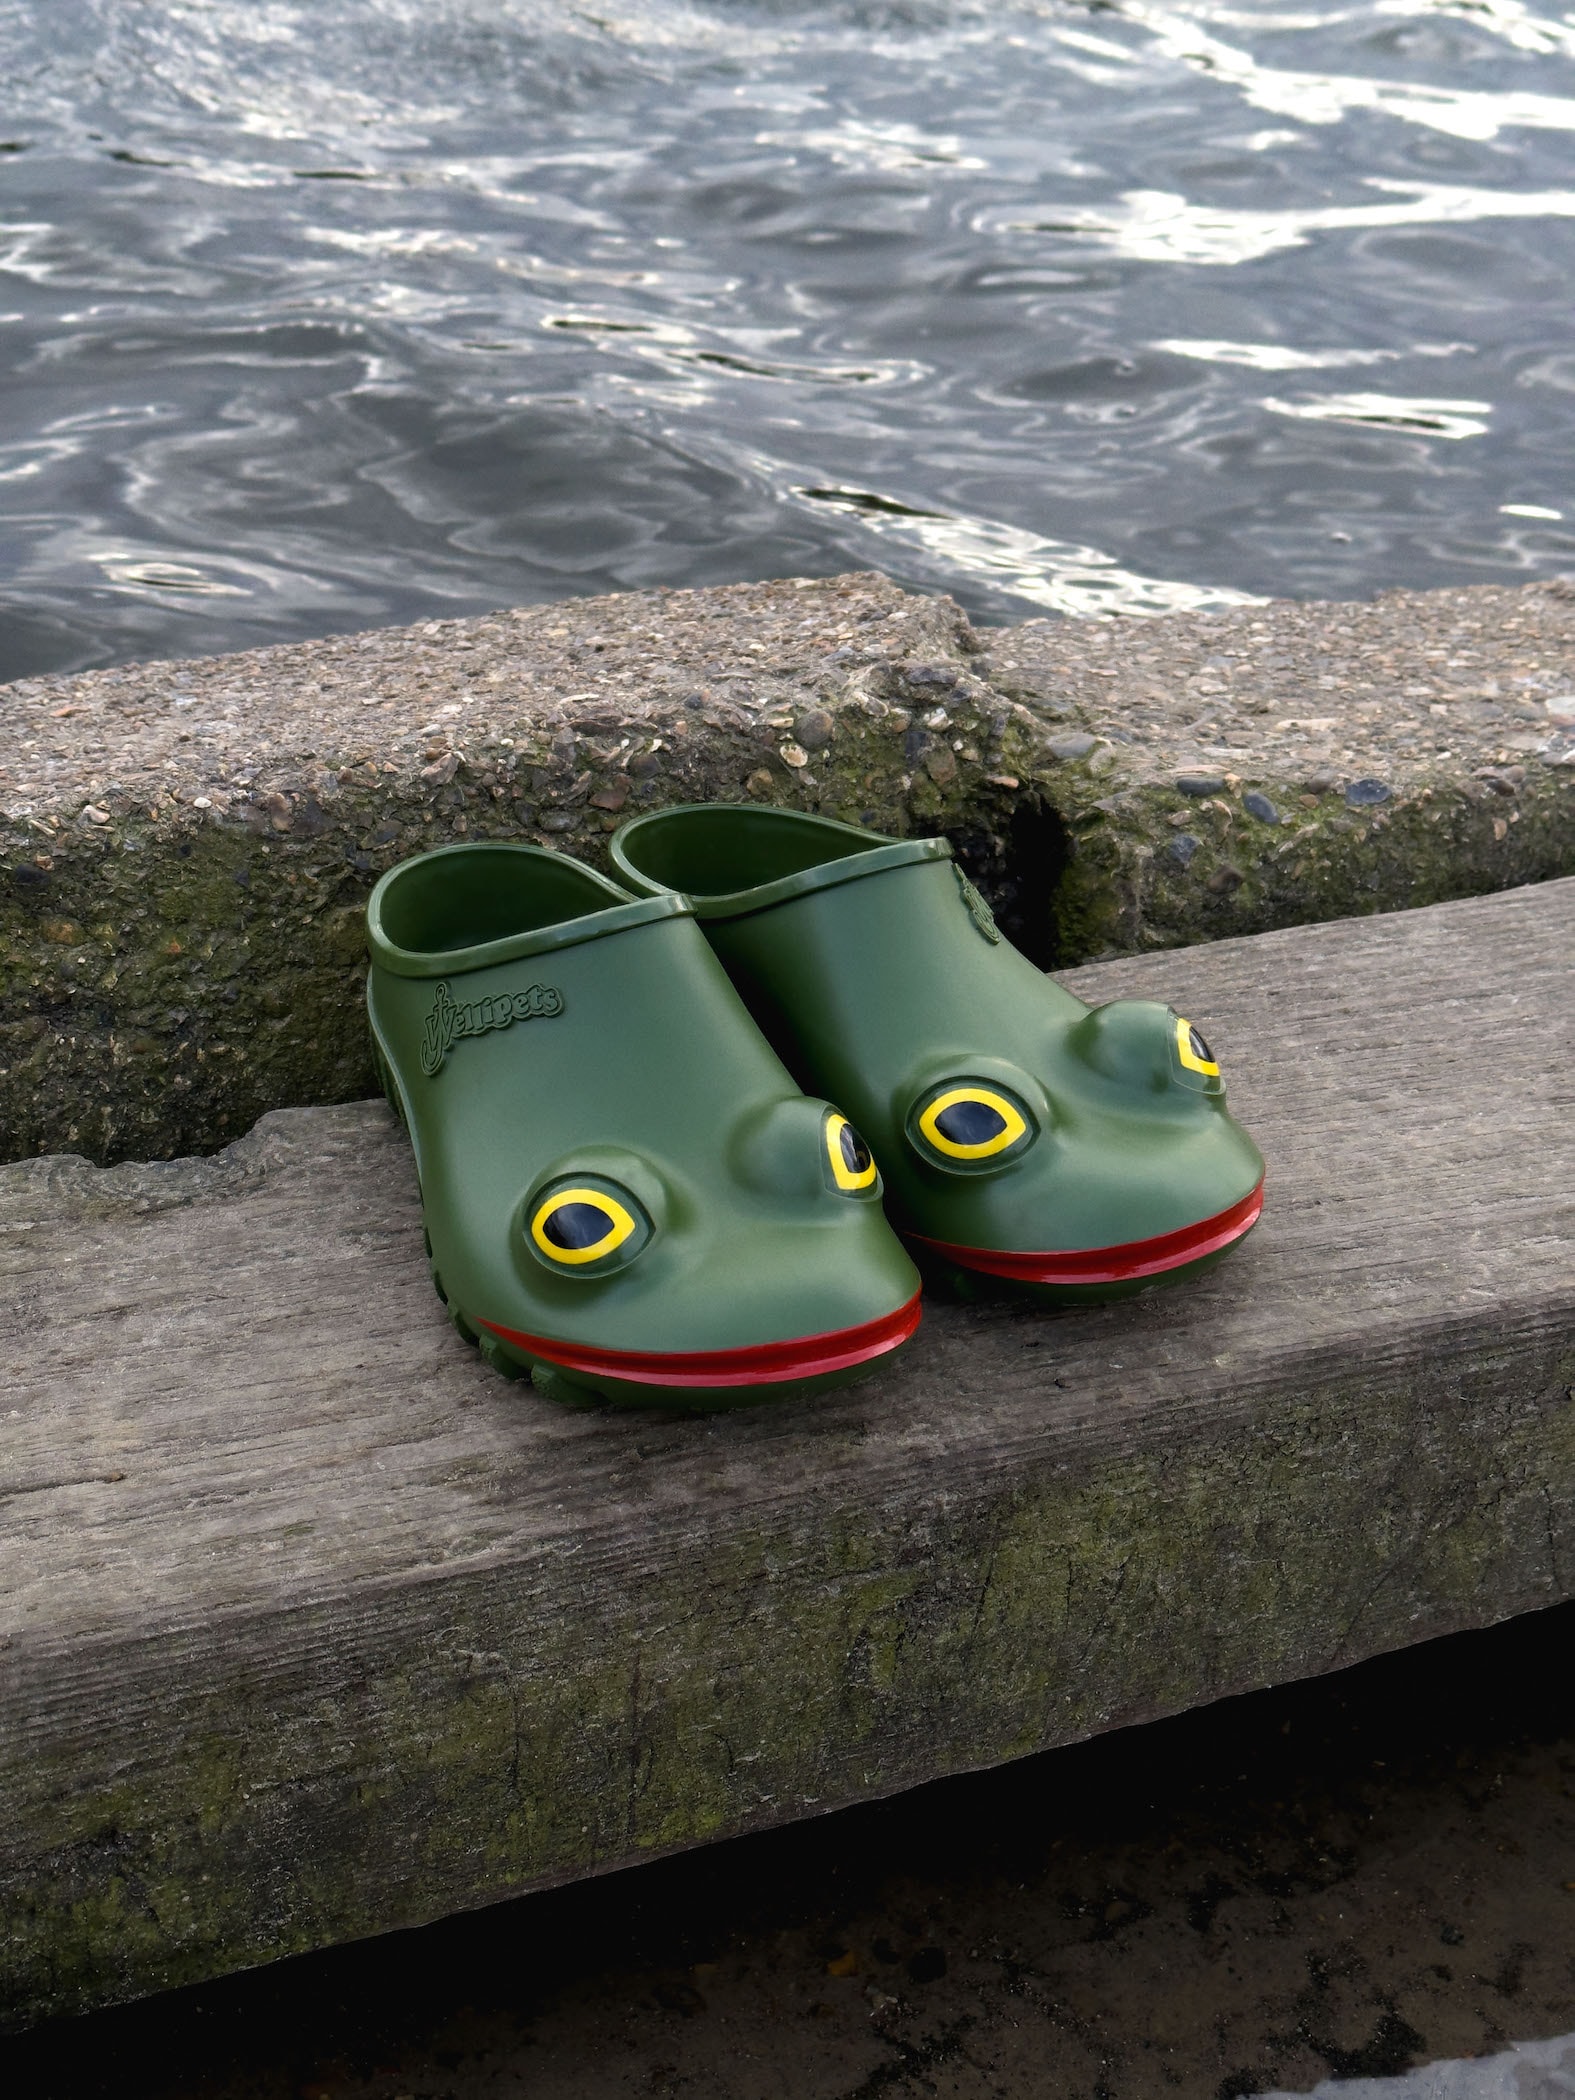 JW Anderson 全新 Wellipets 青蛙鞋联名系列正式登场